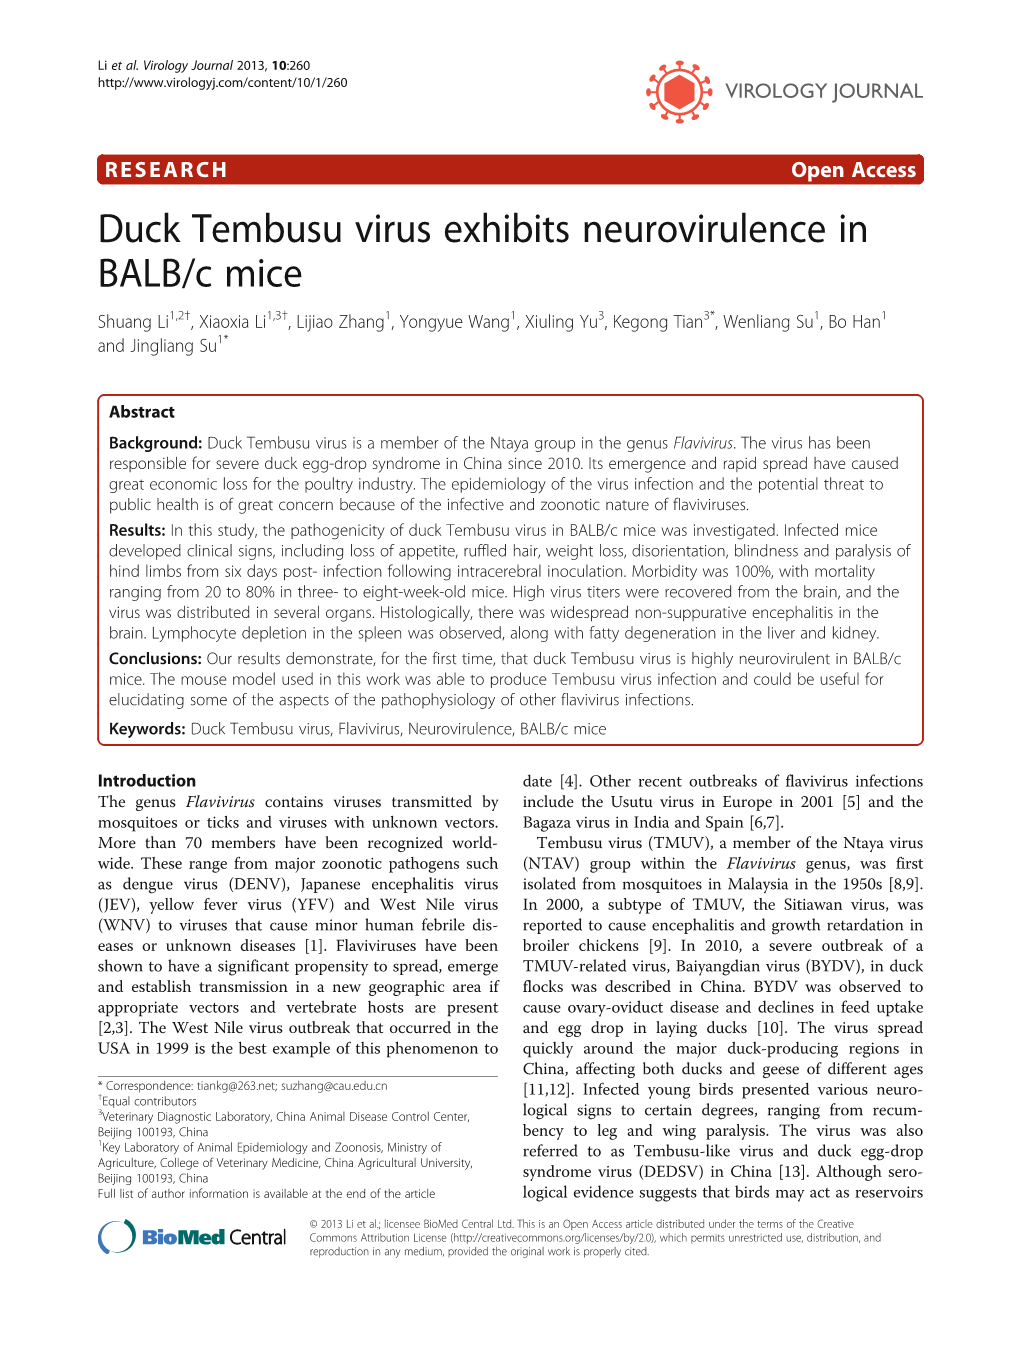 Duck Tembusu Virus Exhibits Neurovirulence in BALB/C Mice